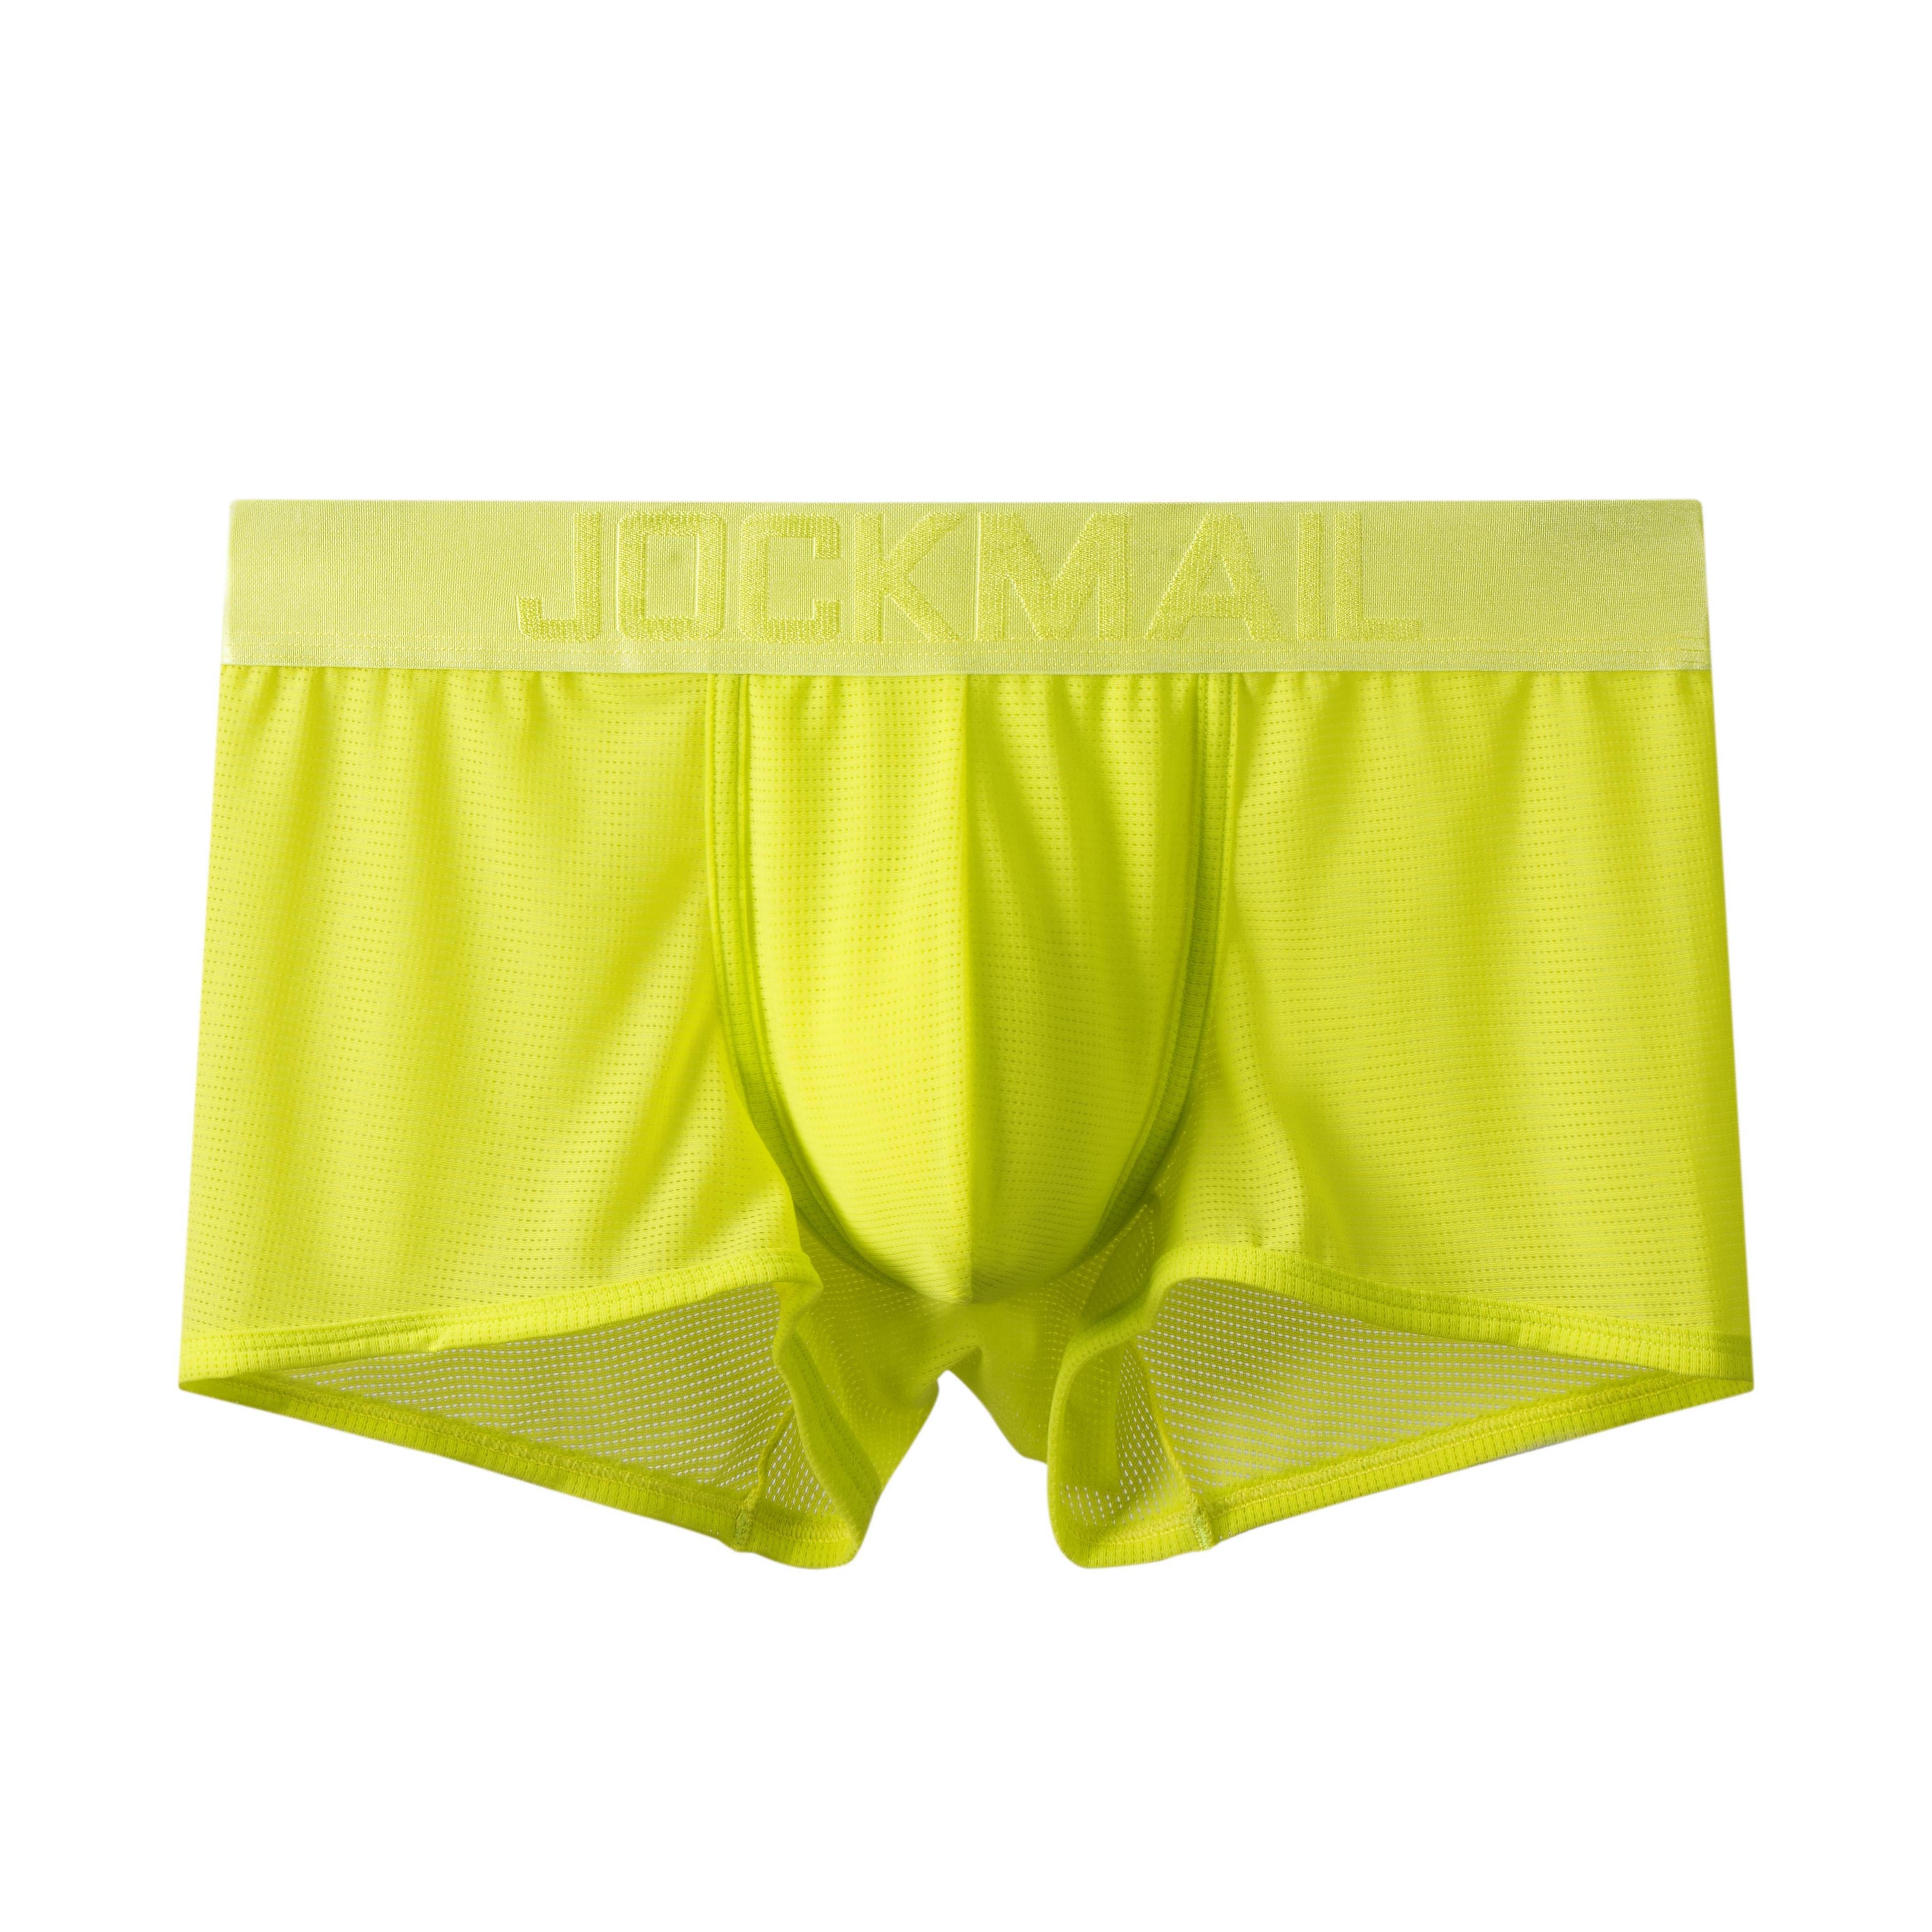 Philosophy Underwear Hegel Phenomenology of Spirit Sexy Underpants Customs  Boxer Brief 3D Pouch Man Plus Size Boxer Shorts